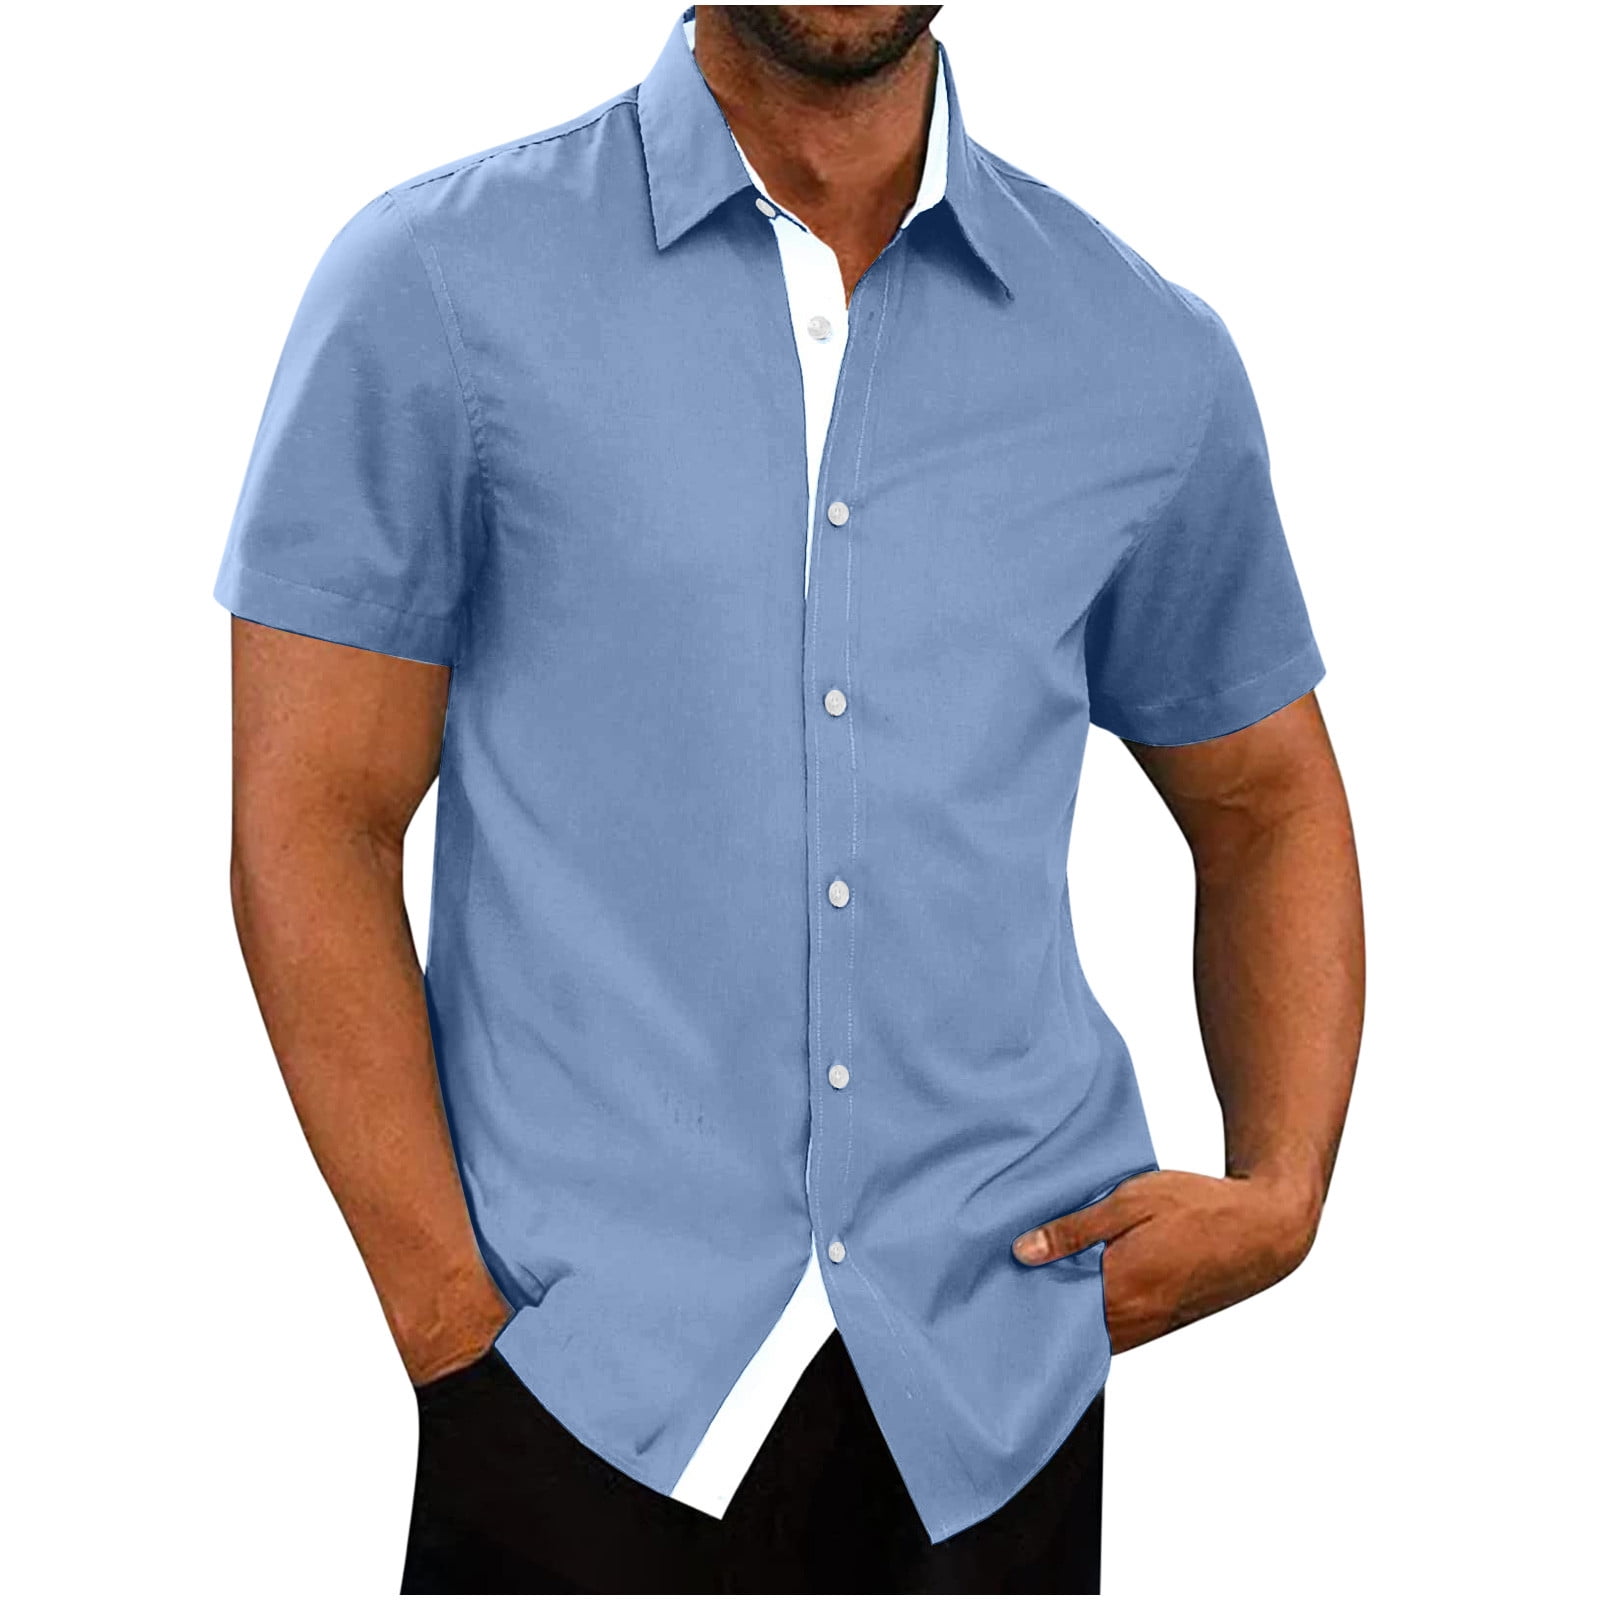 RYRJJ Men's Short Sleeve Dress Shirts Casual Button Down Shirts  Wrinkle-Free Business Work Shirt Tops(Blue,L)